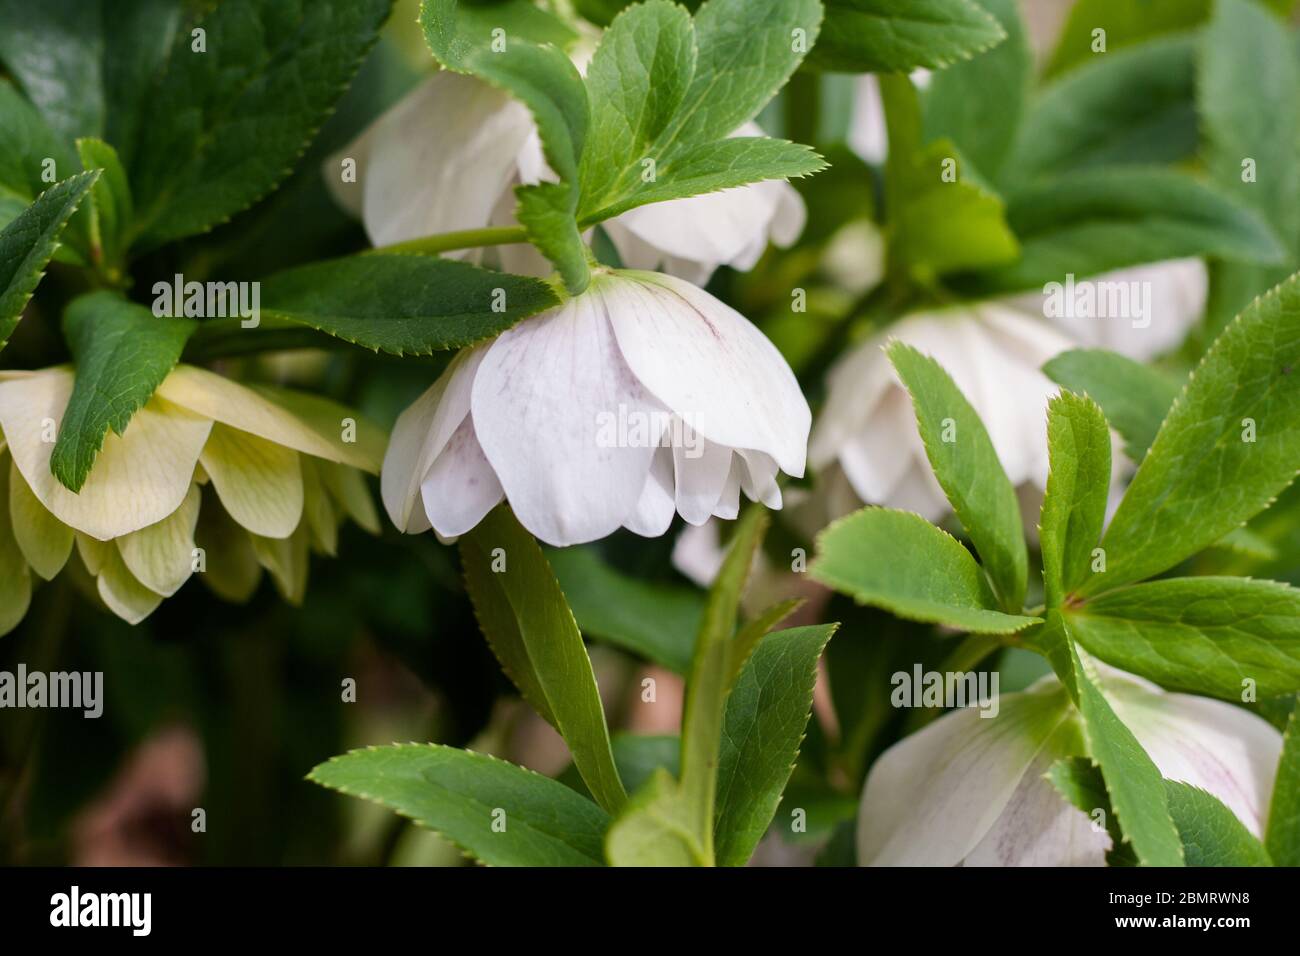 White flower nature background Stock Photo